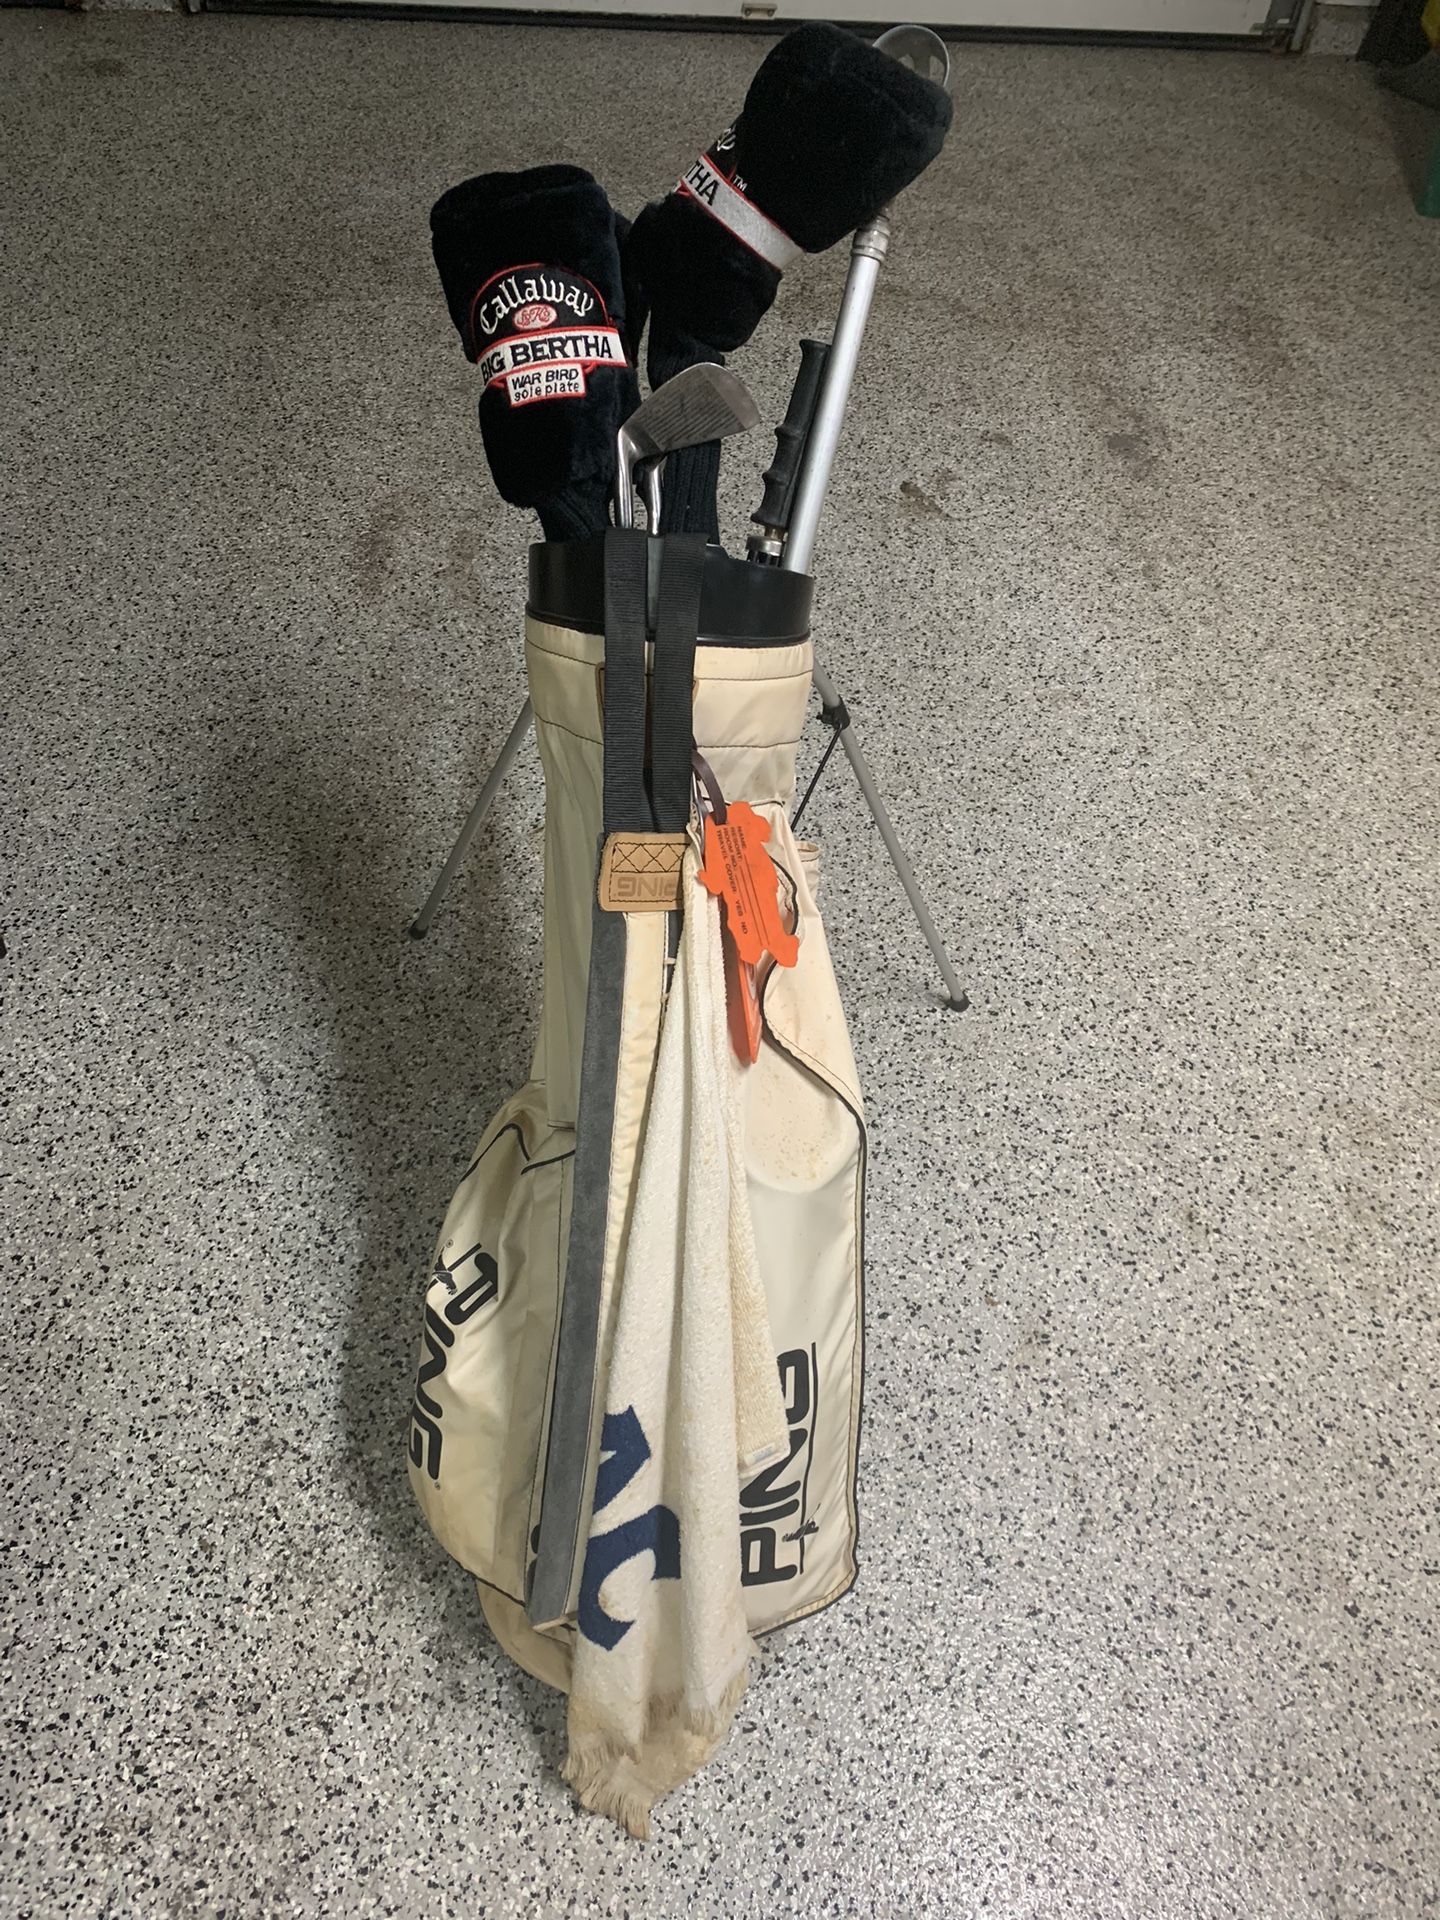 Golf Bag And Club 